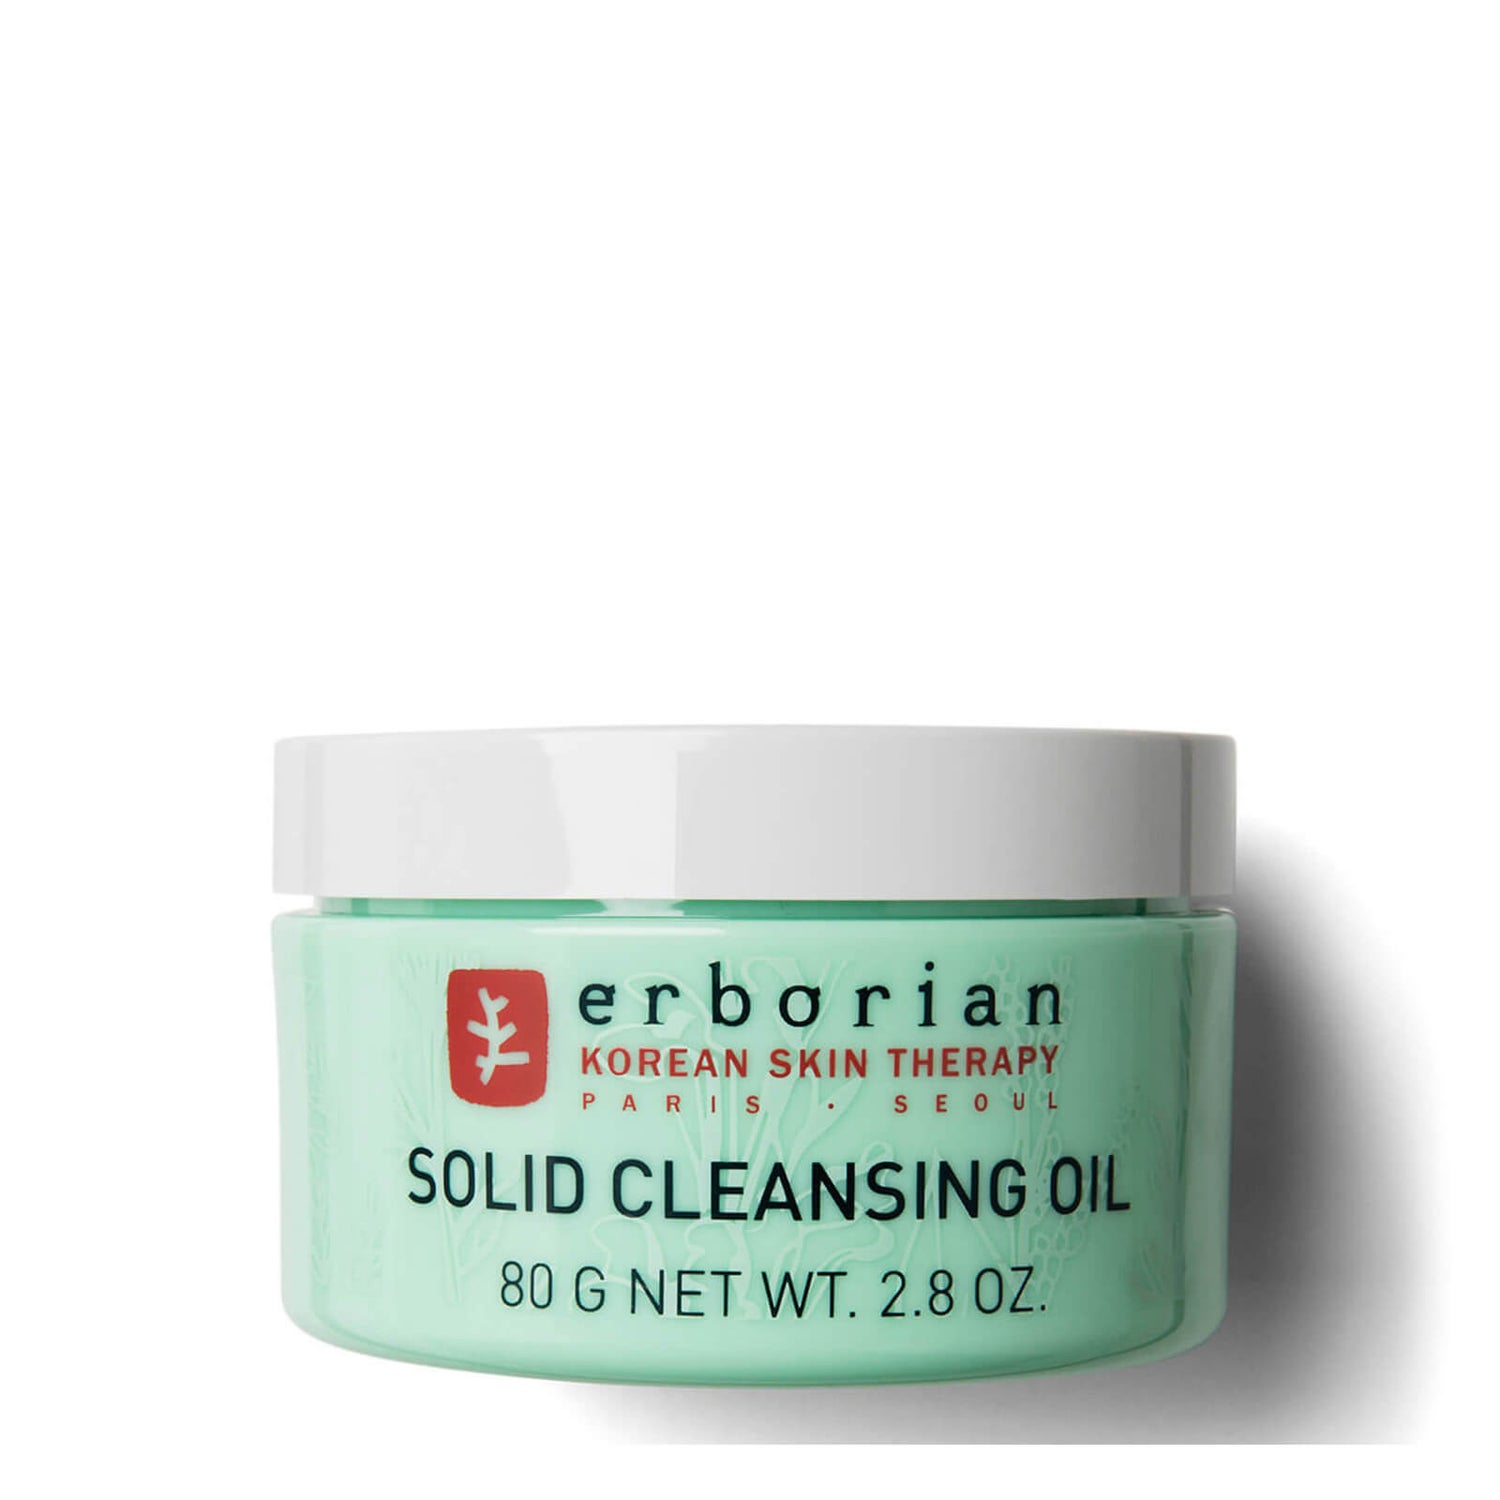 Erborian Solid Cleansing Oil 2.8 oz